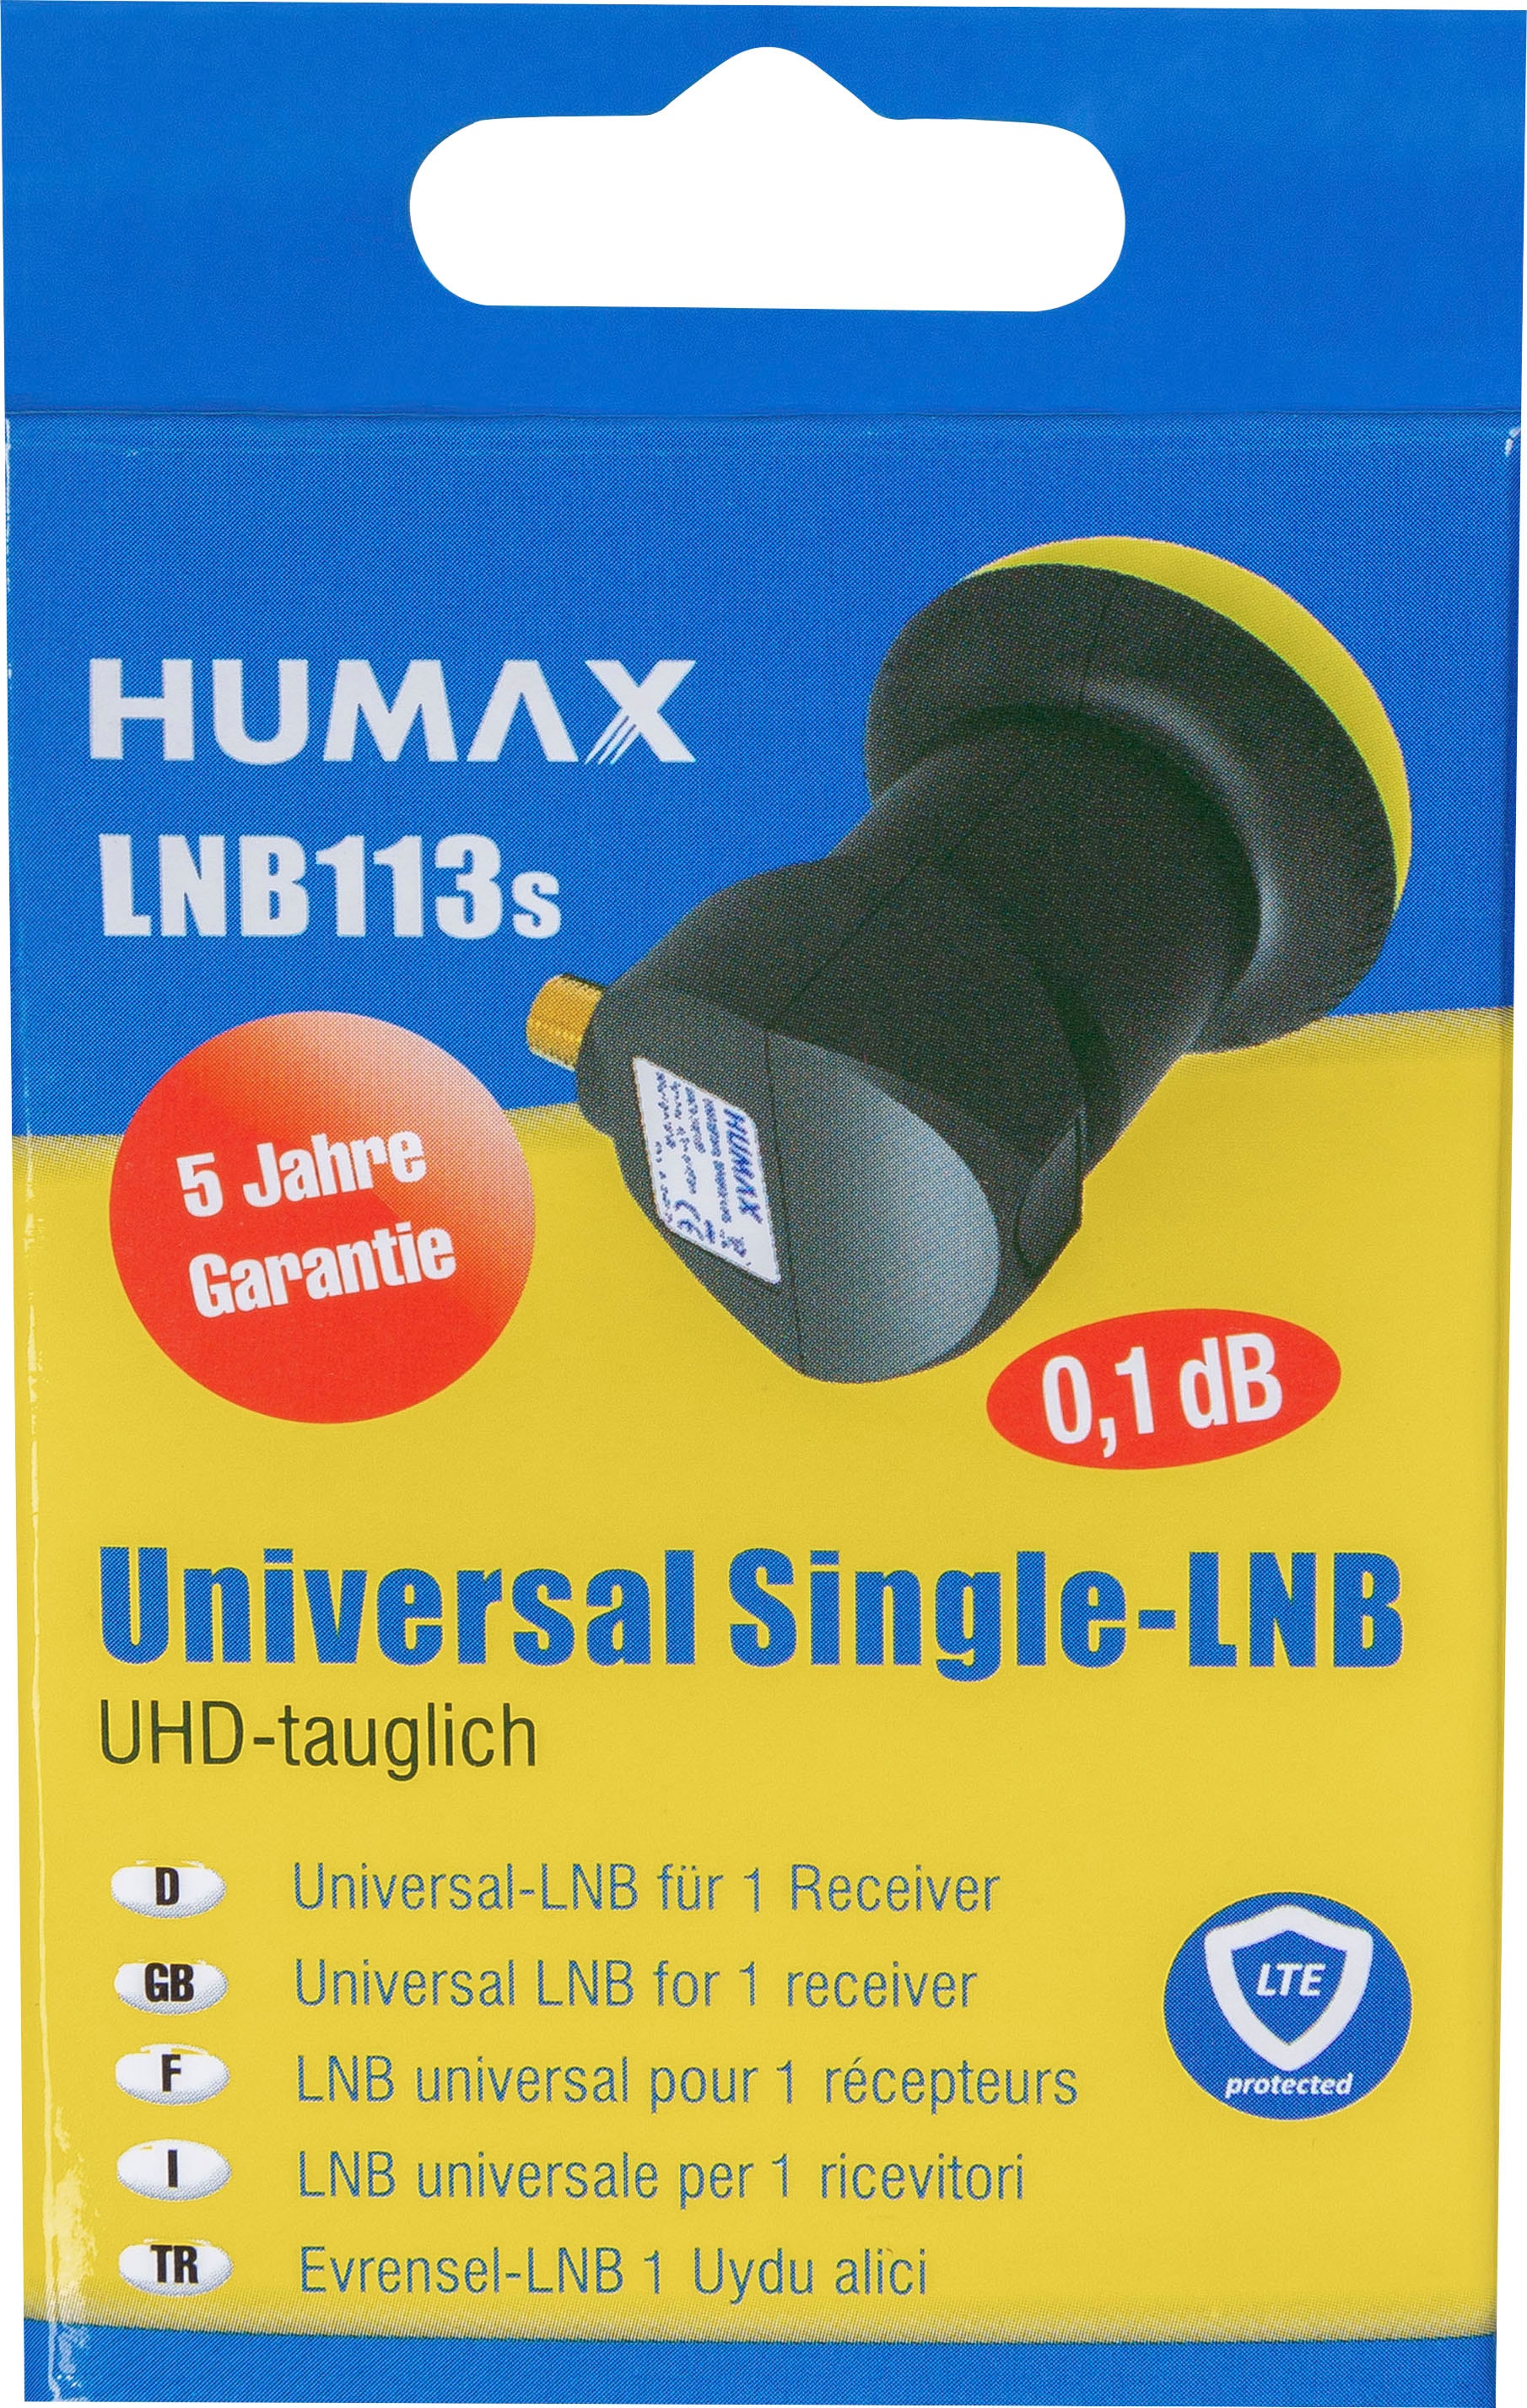 Humax SAT-Antenne »LNB 113s Gold Single Universal LNB« | BAUR